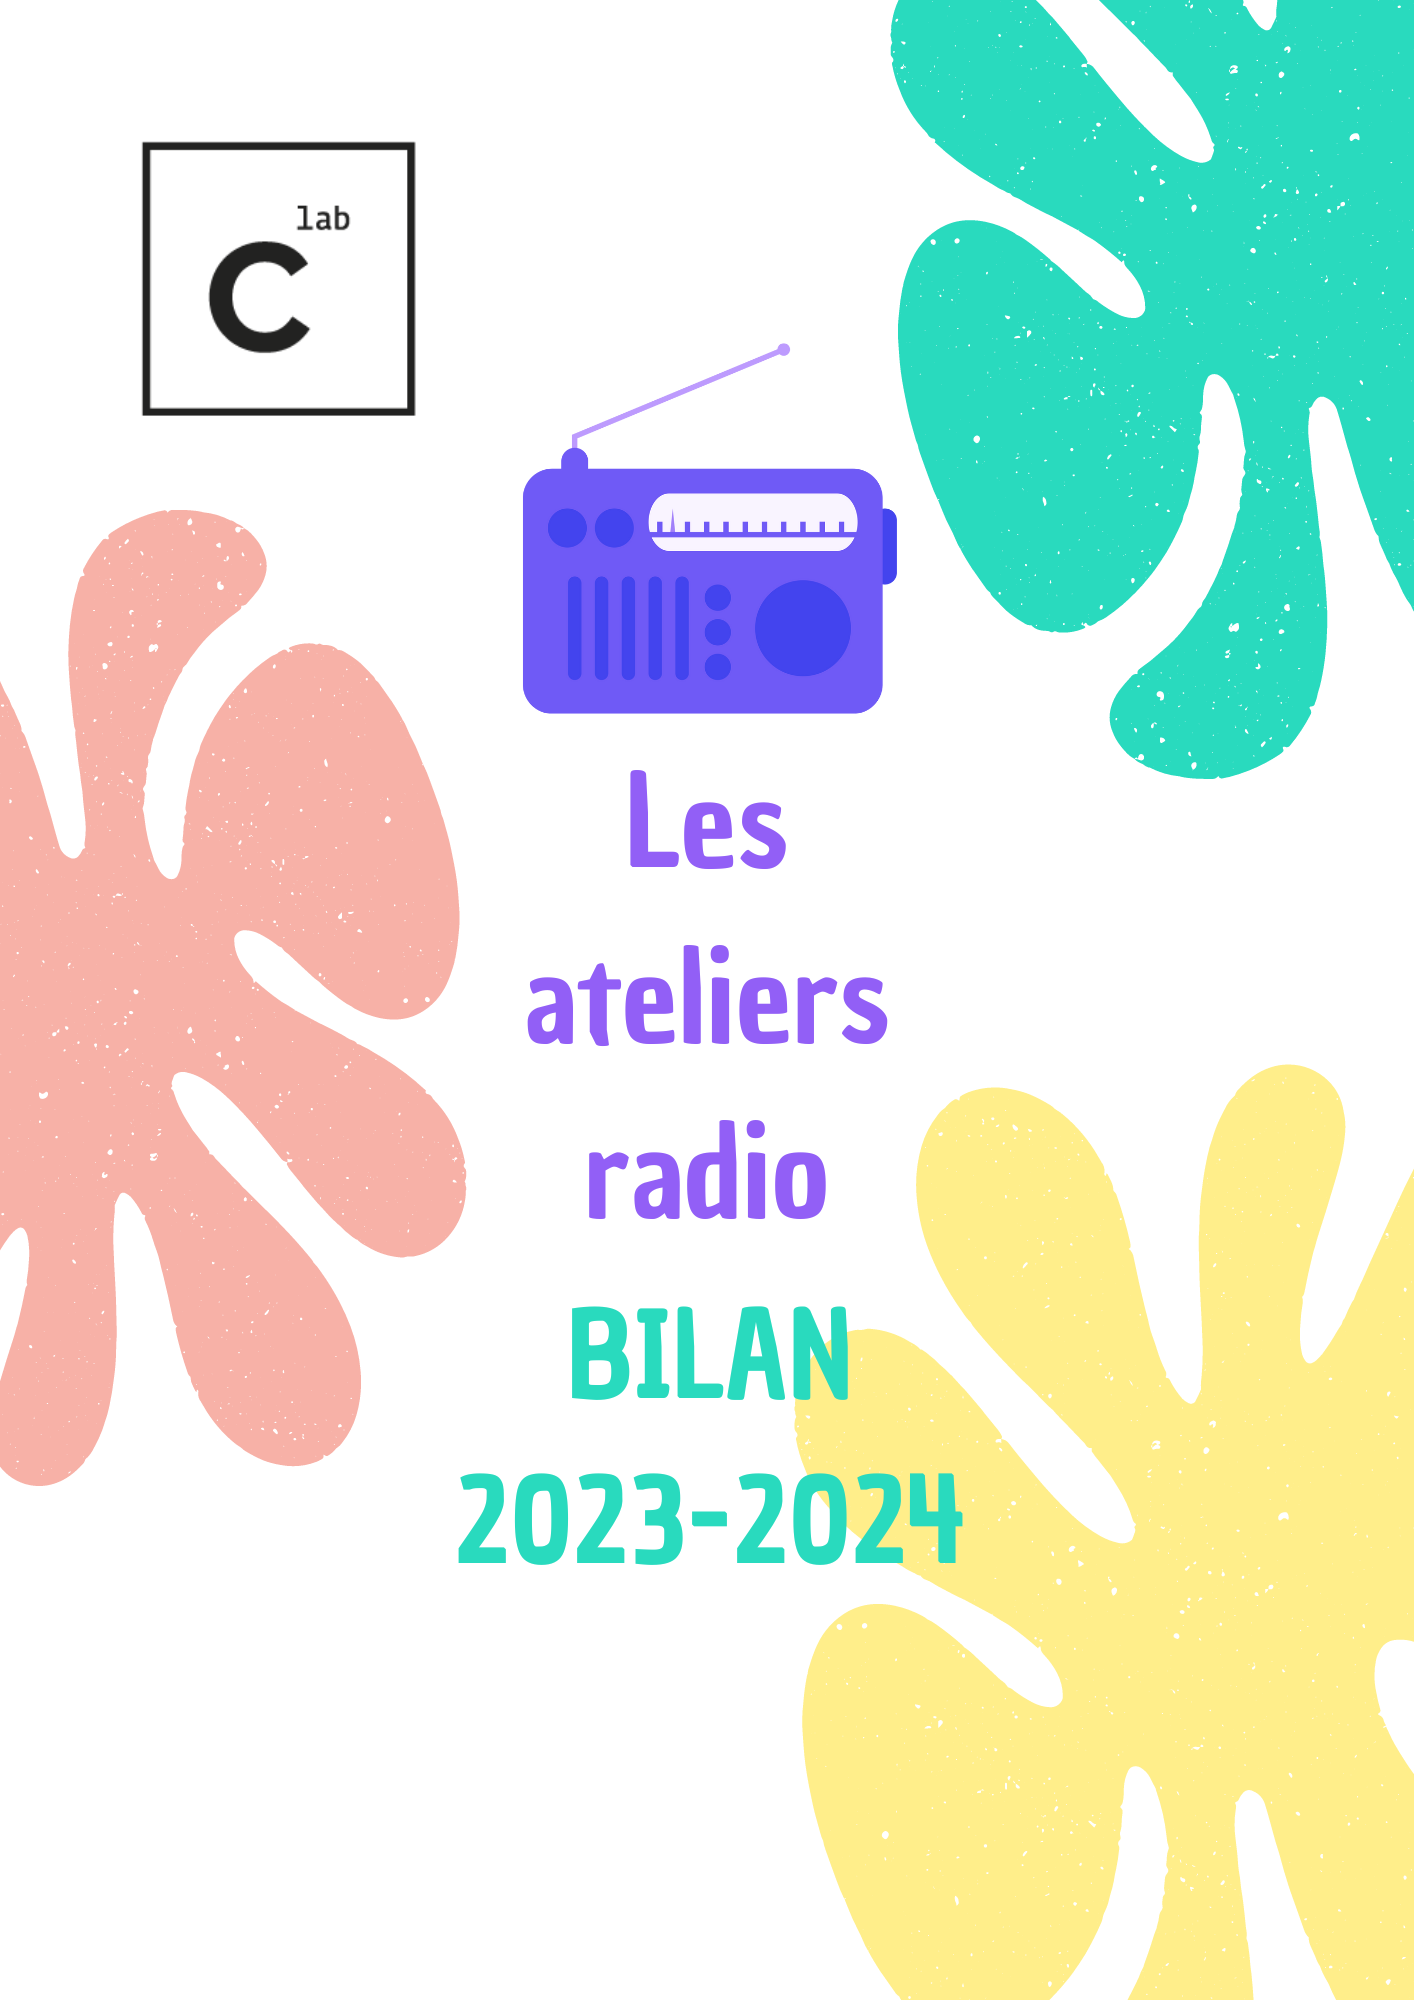 Bilan des ateliers Radio 2023-2024